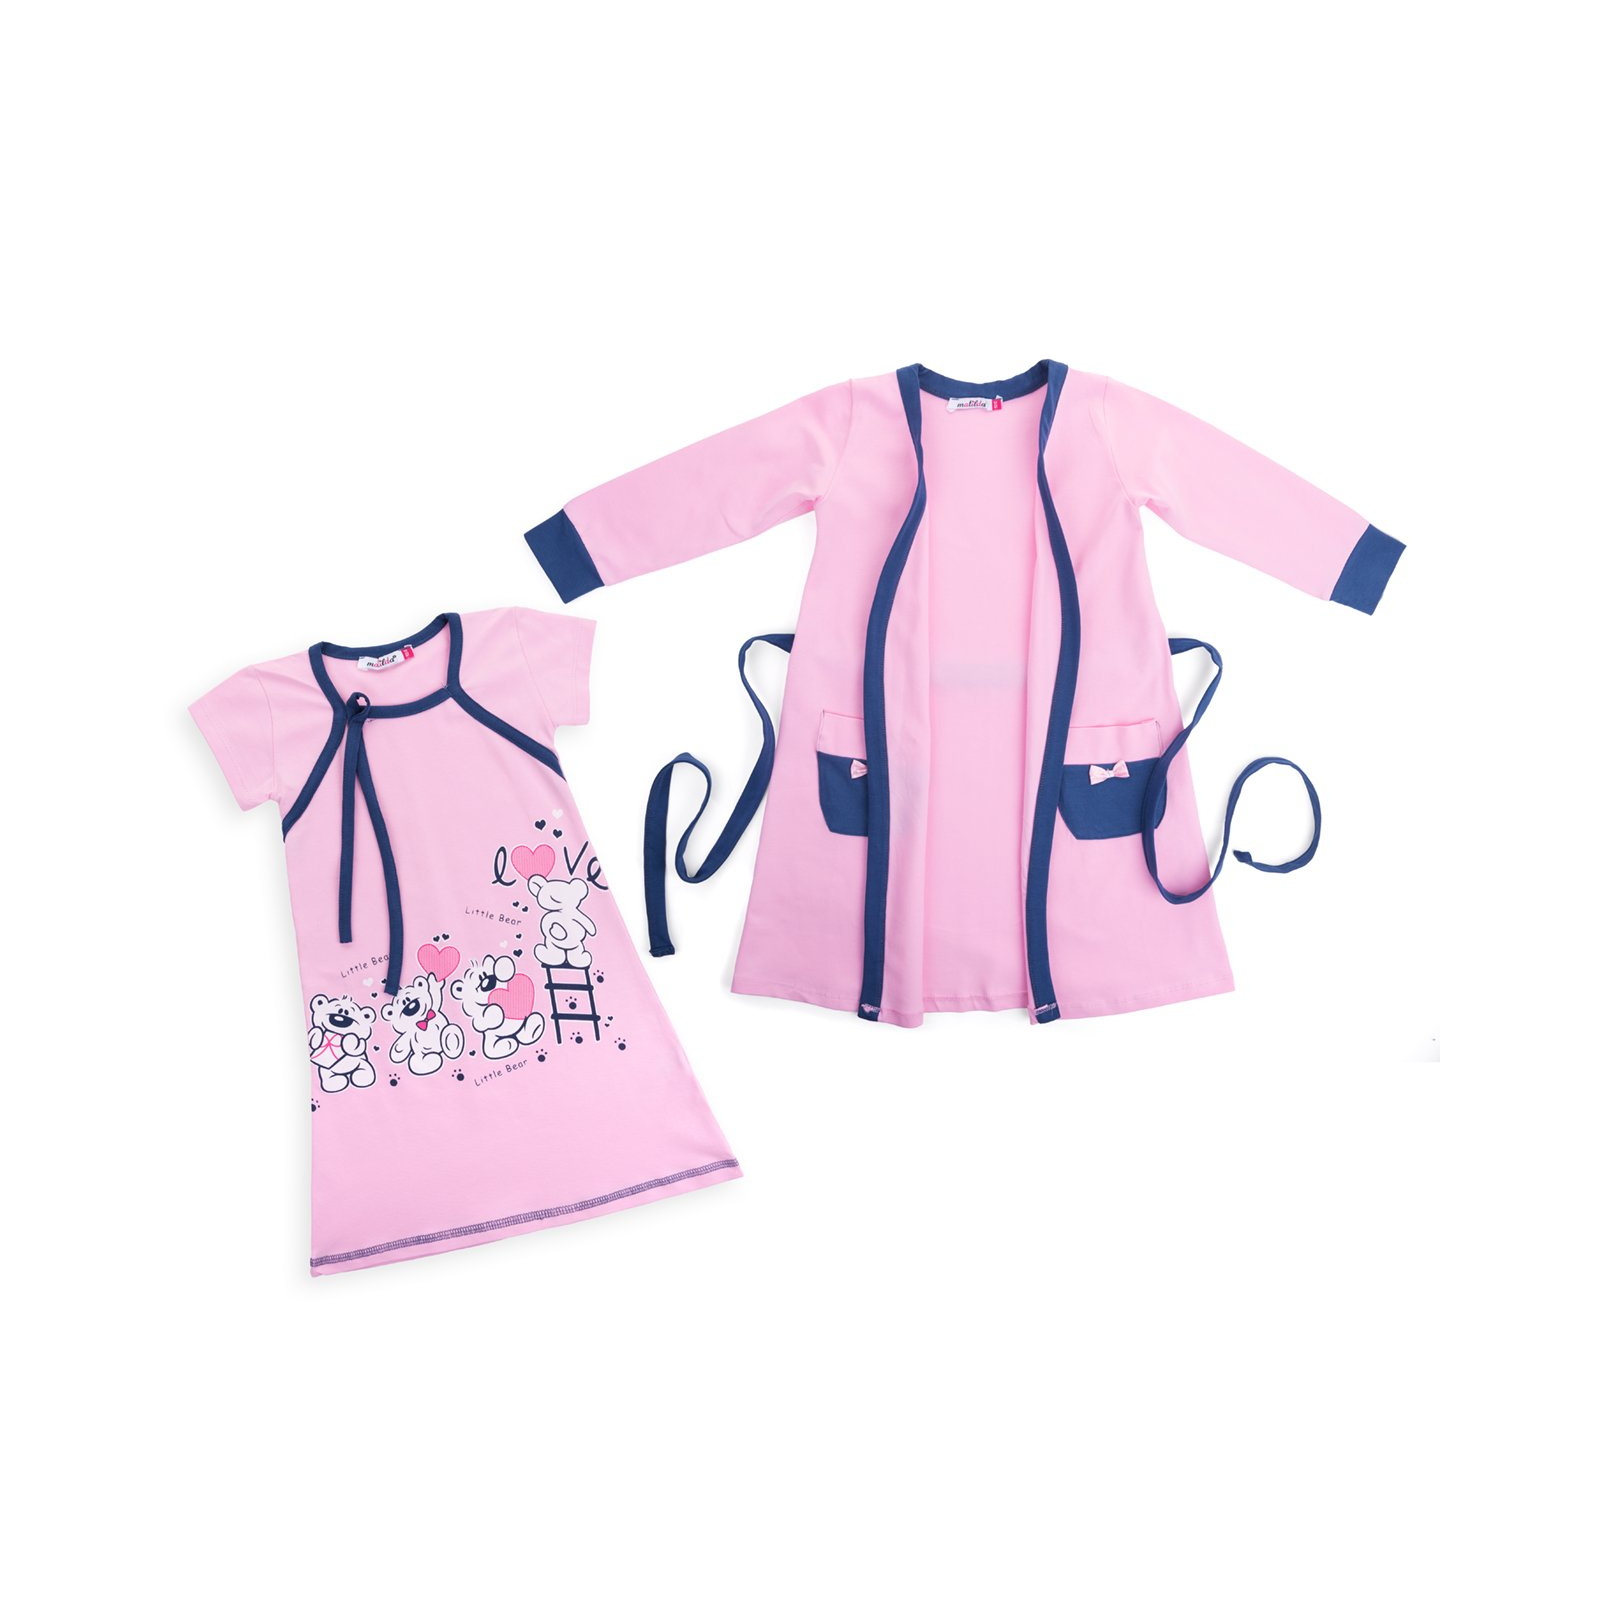 Пижама Matilda и халат с мишками "Love" (7445-116G-pink)